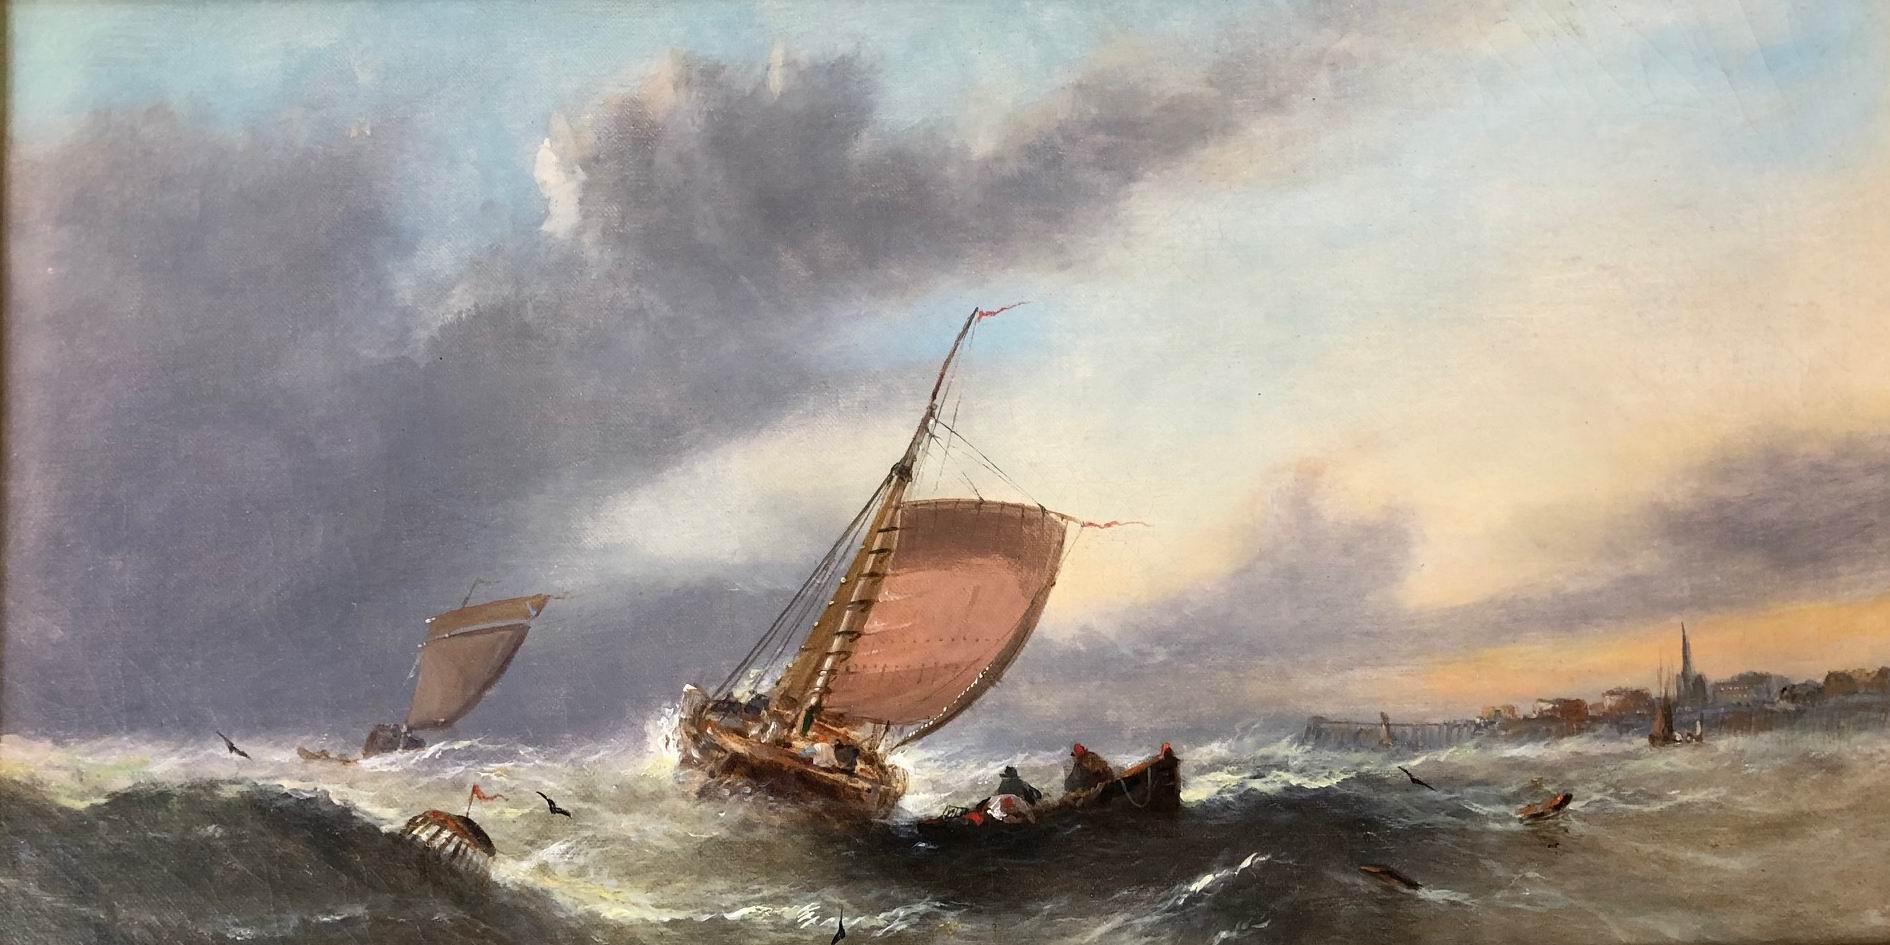 Landscape Painting william callcott knell - Peinture à l'huile de grande taille « Fishermen off the Coast in Choppy Seas at Sunrise »